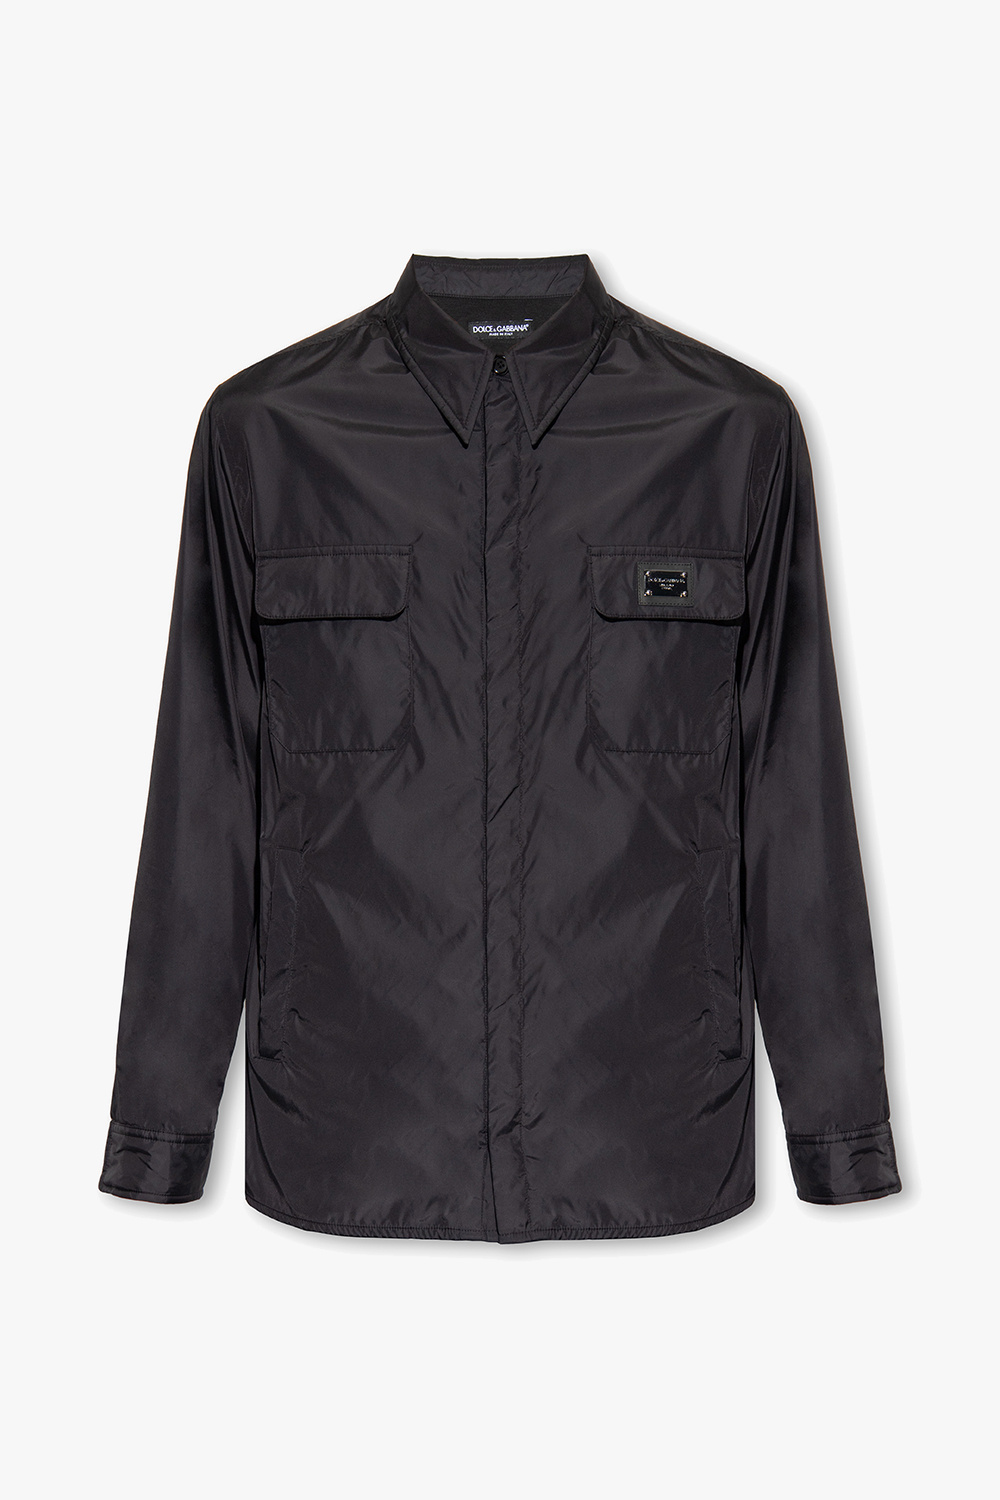 Dolce & Gabbana Shirt-style jacket